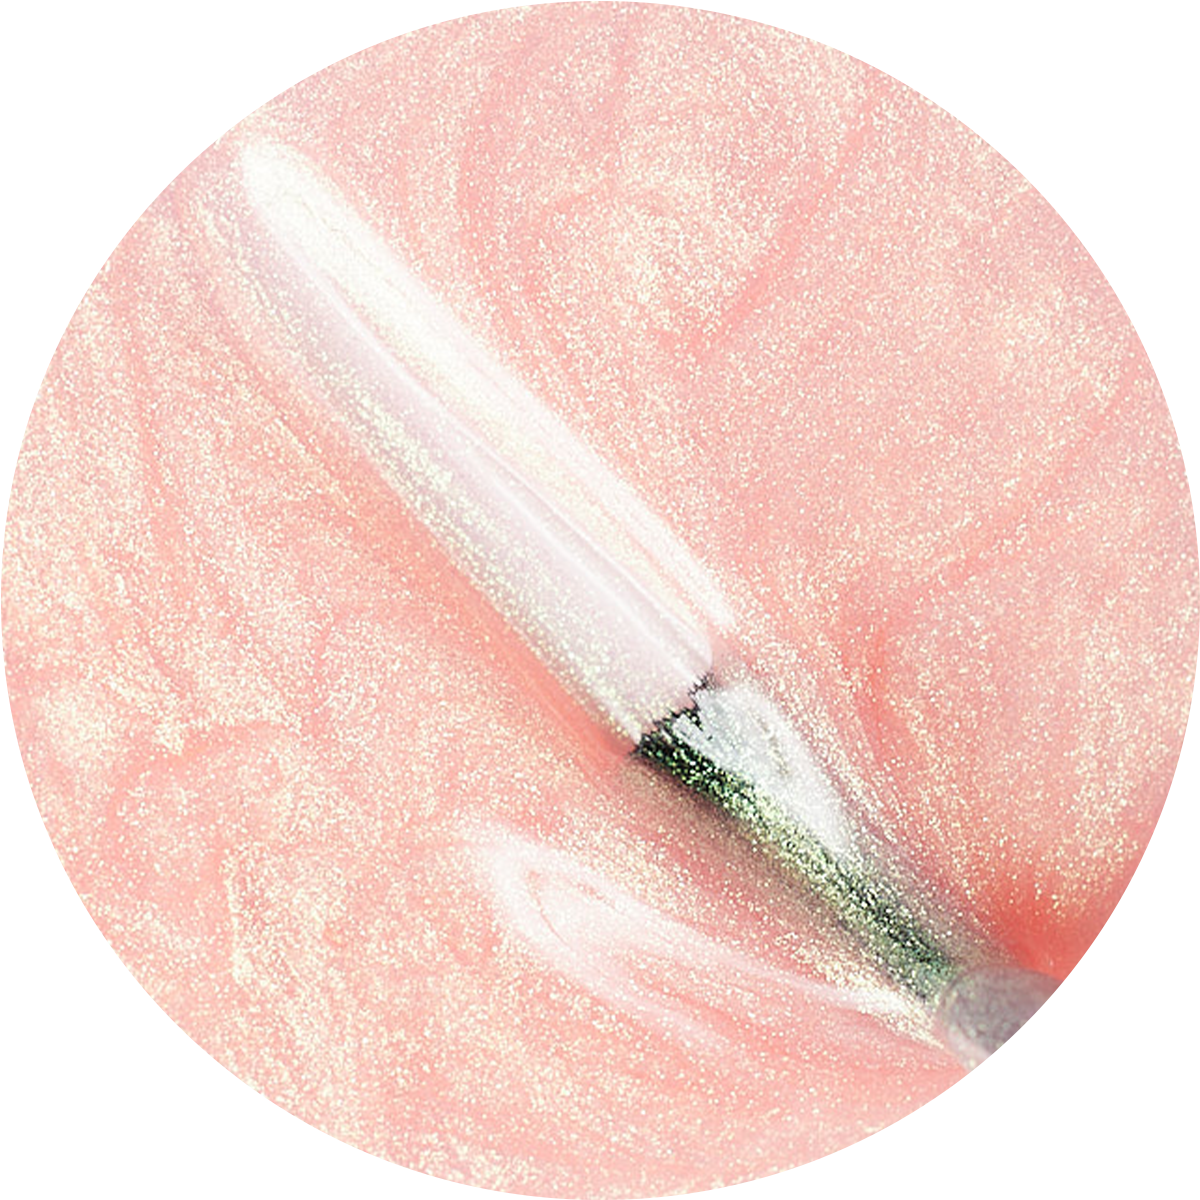 closeup paint swatch of pink shimmer nail polish